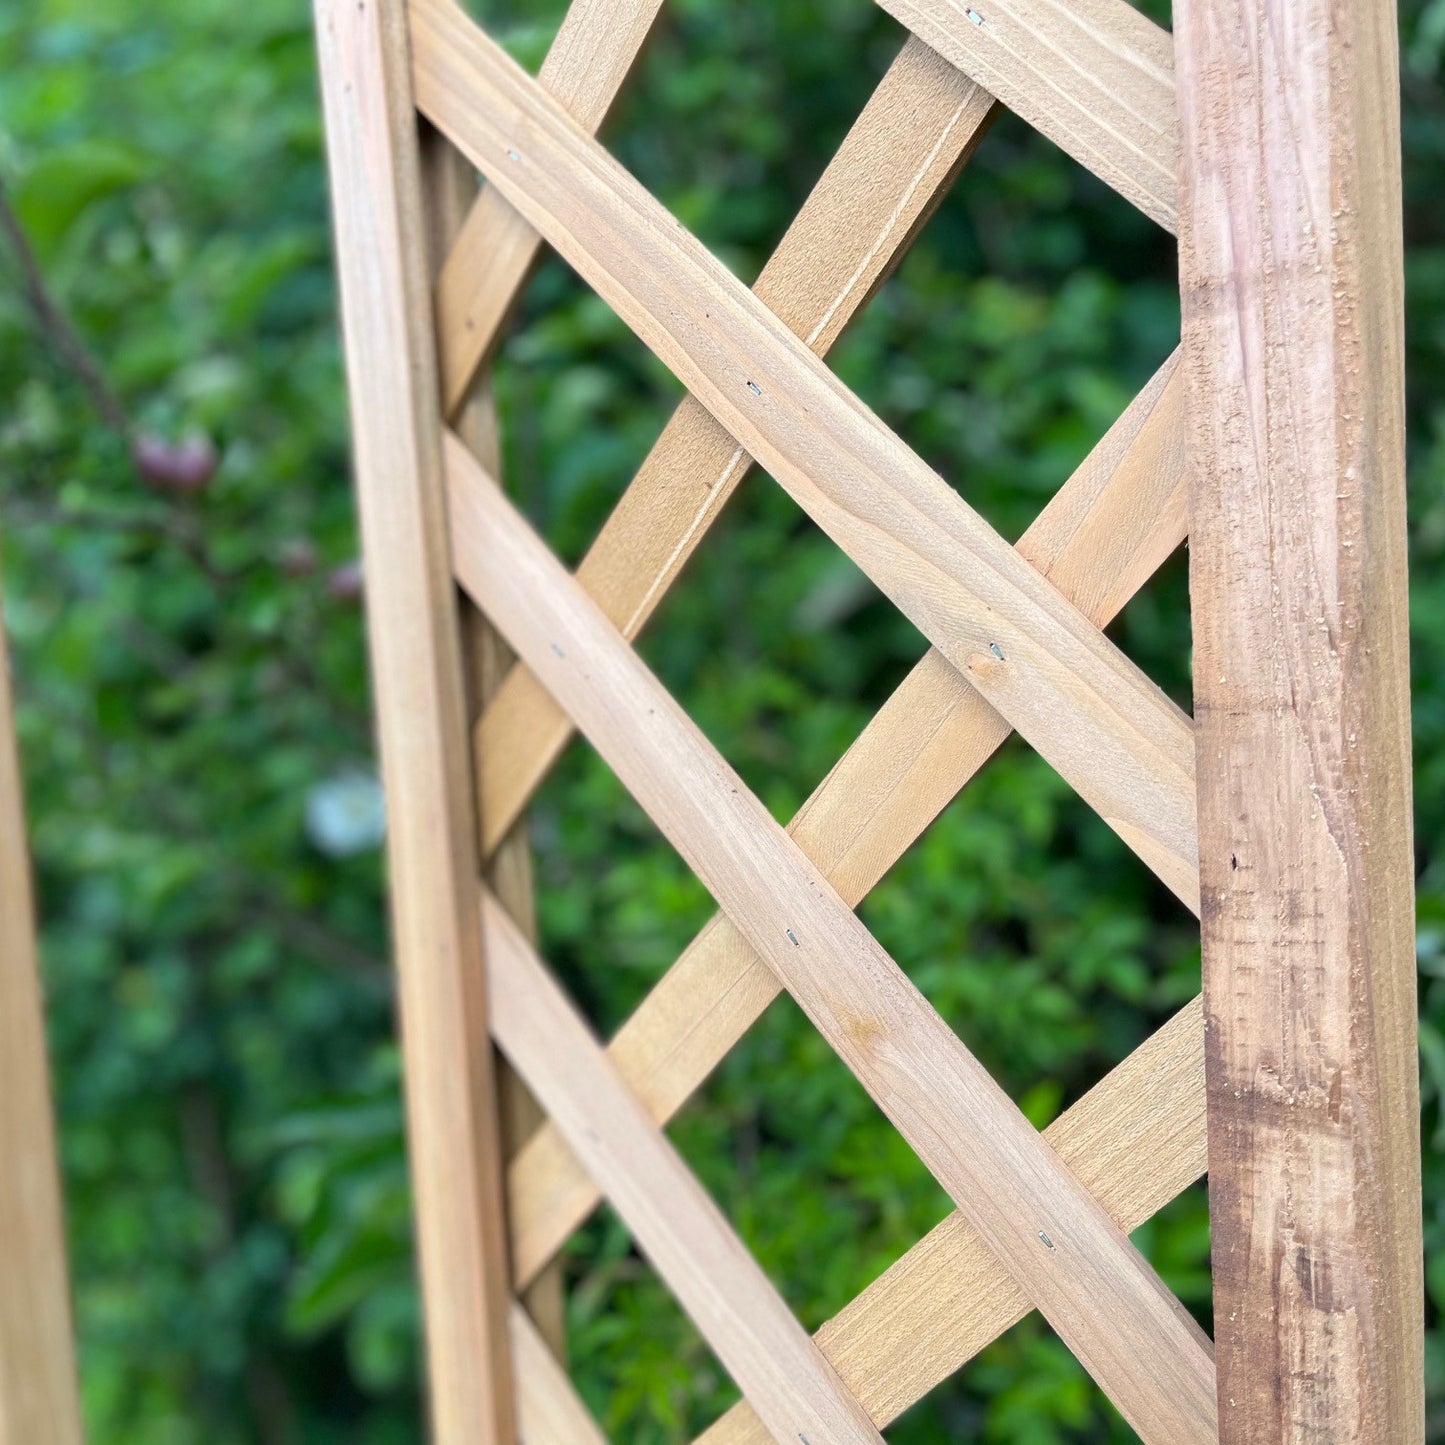 Set of 5 Wooden Framed Square Trellis Panels Fence Toppers (180cm x 30cm)